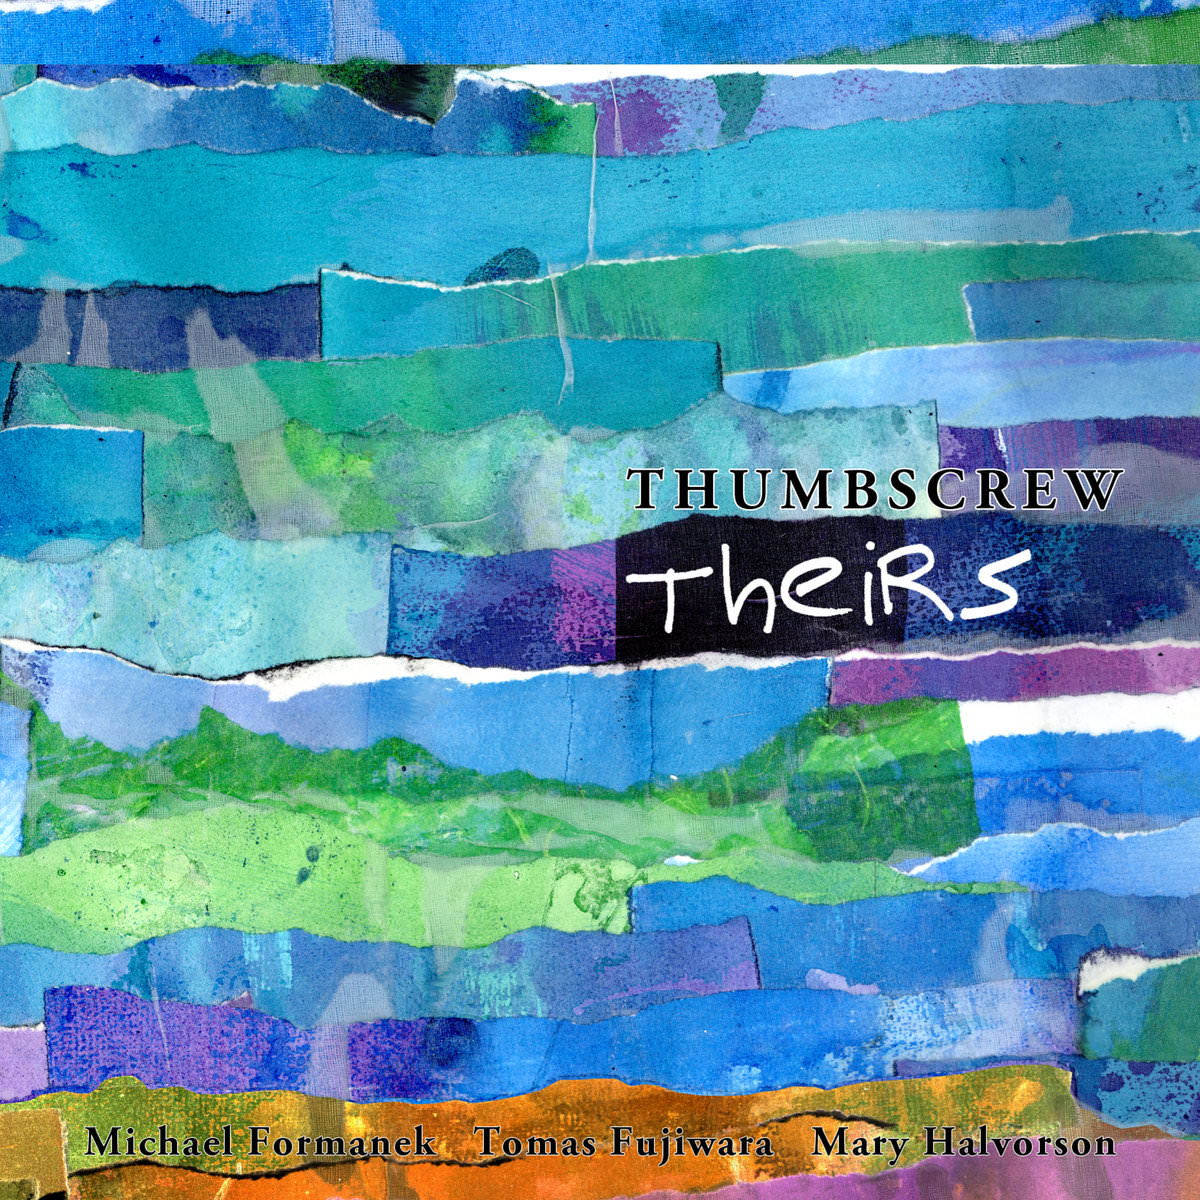 Thumbscrew - Theirs (2018) [FLAC 24bit/48kHz]